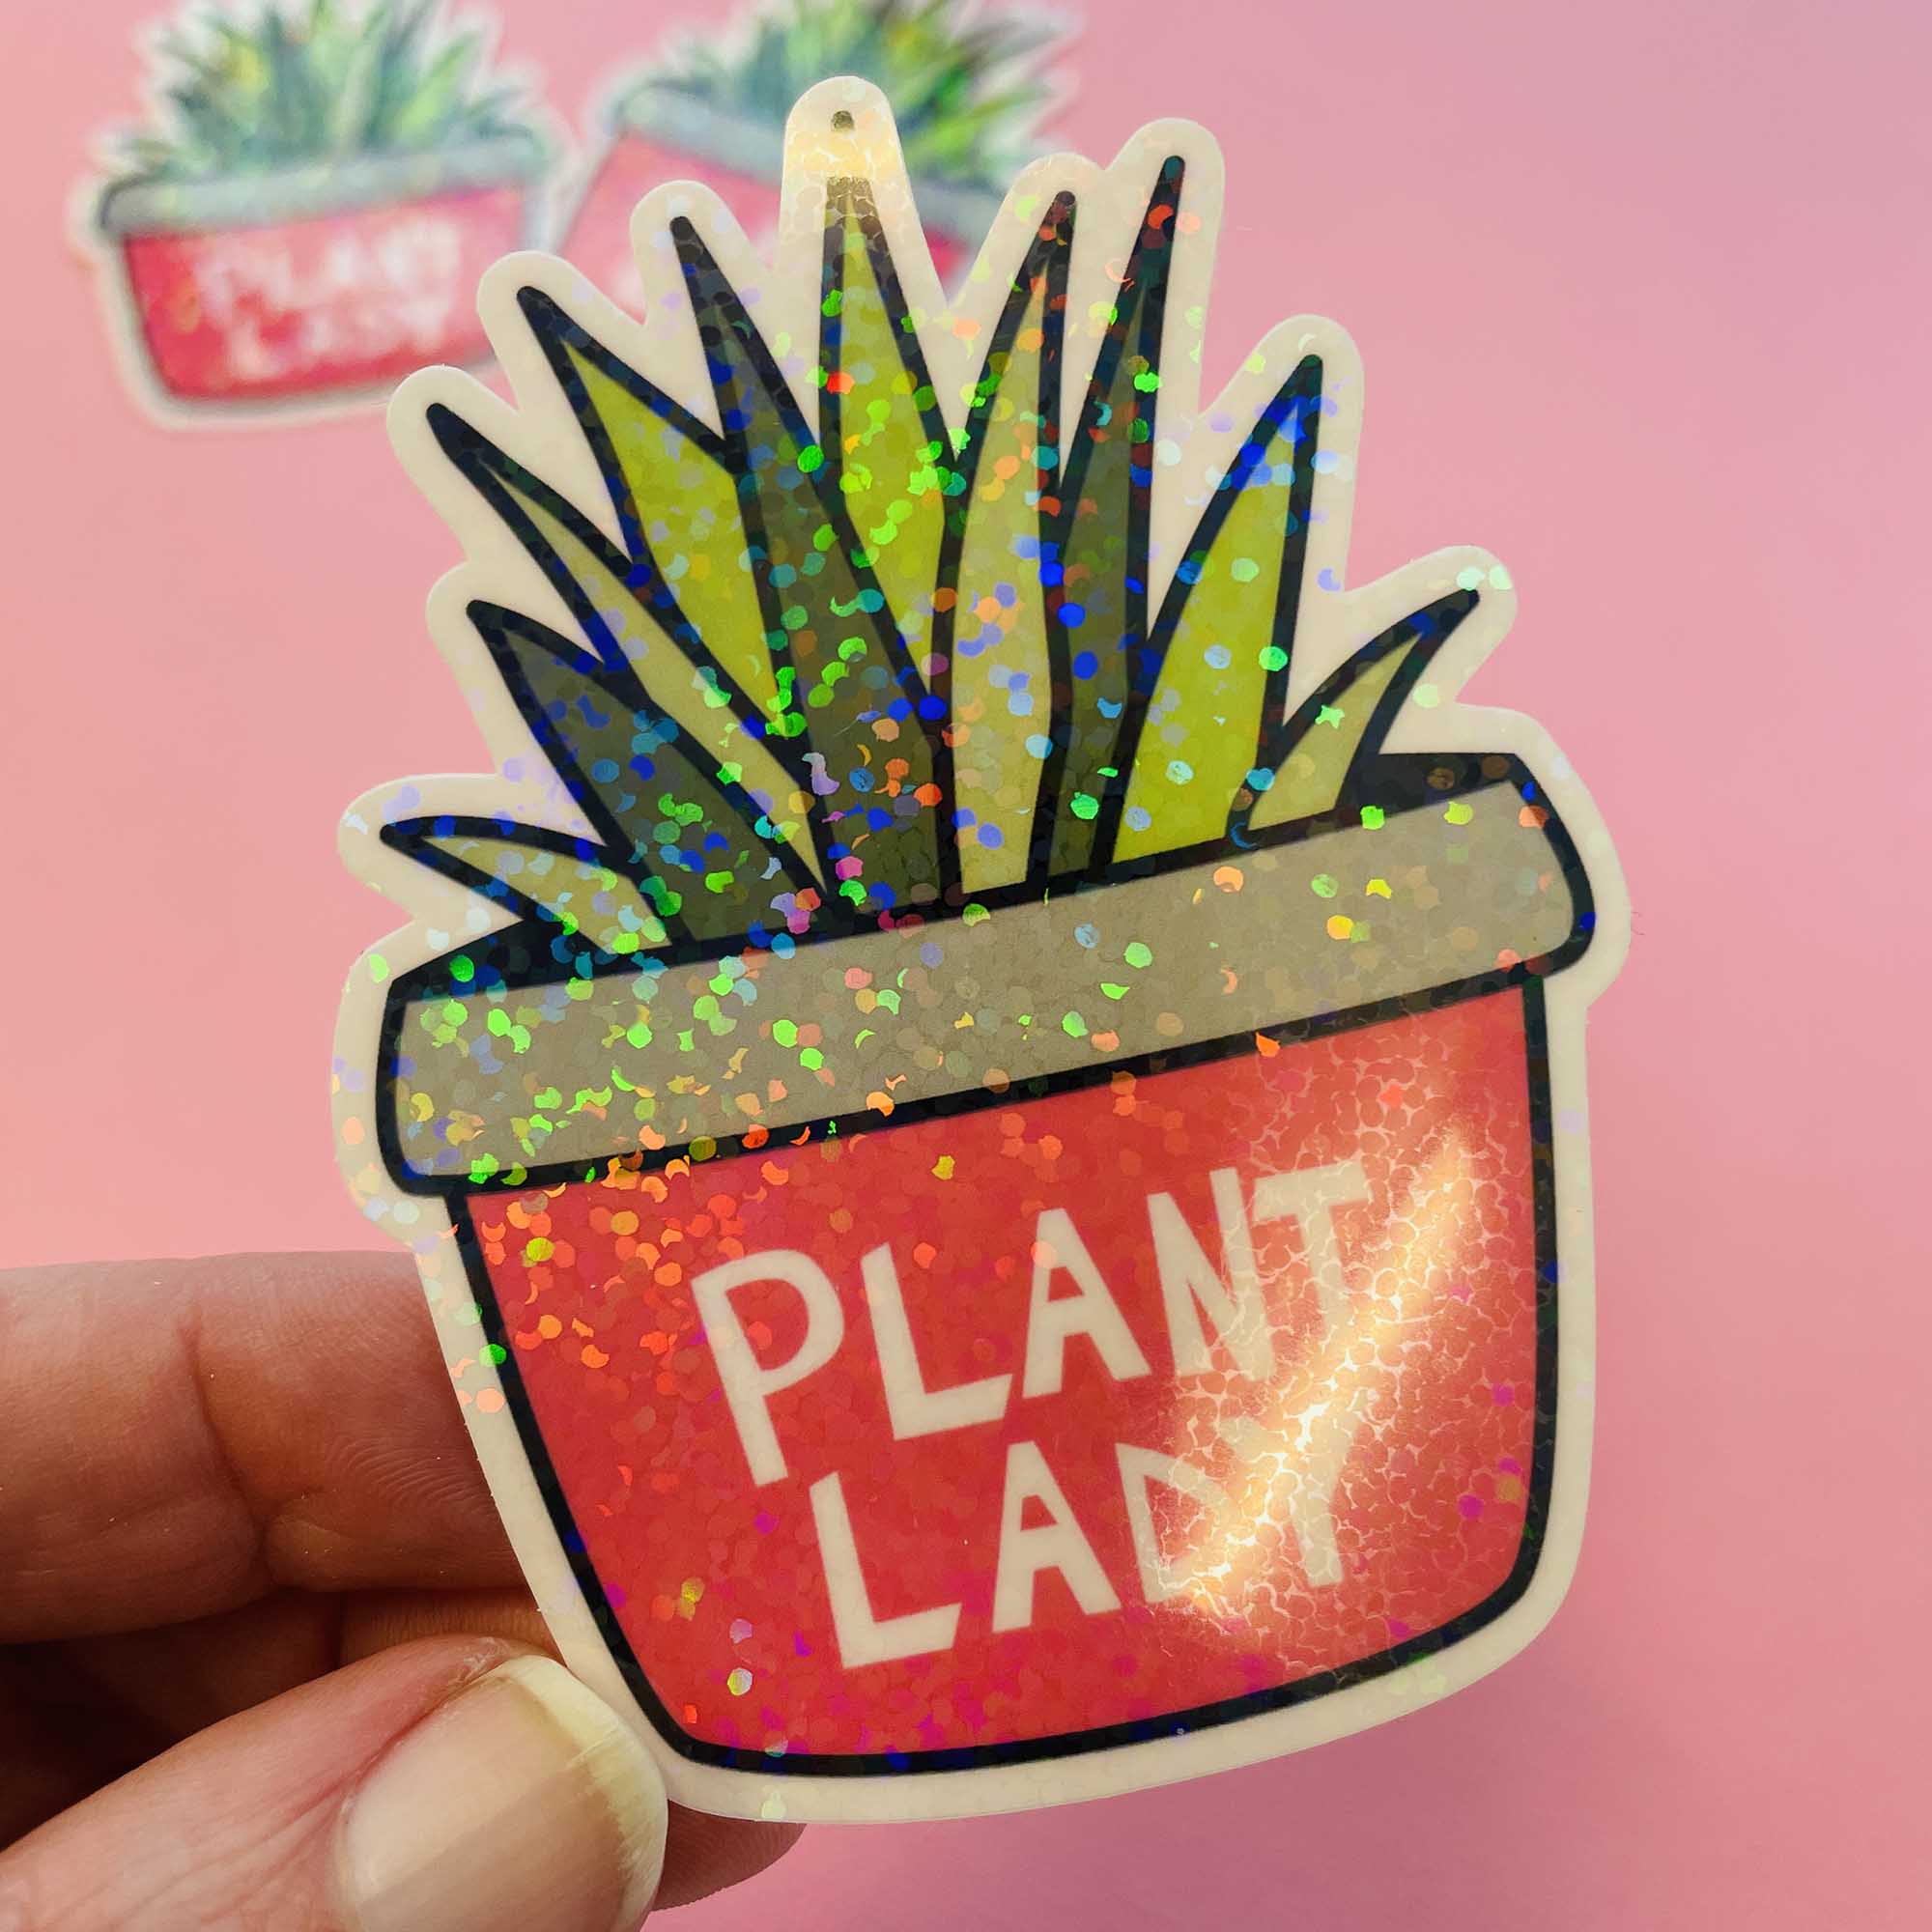 Die Cut Sticker: Holo Plant Lady